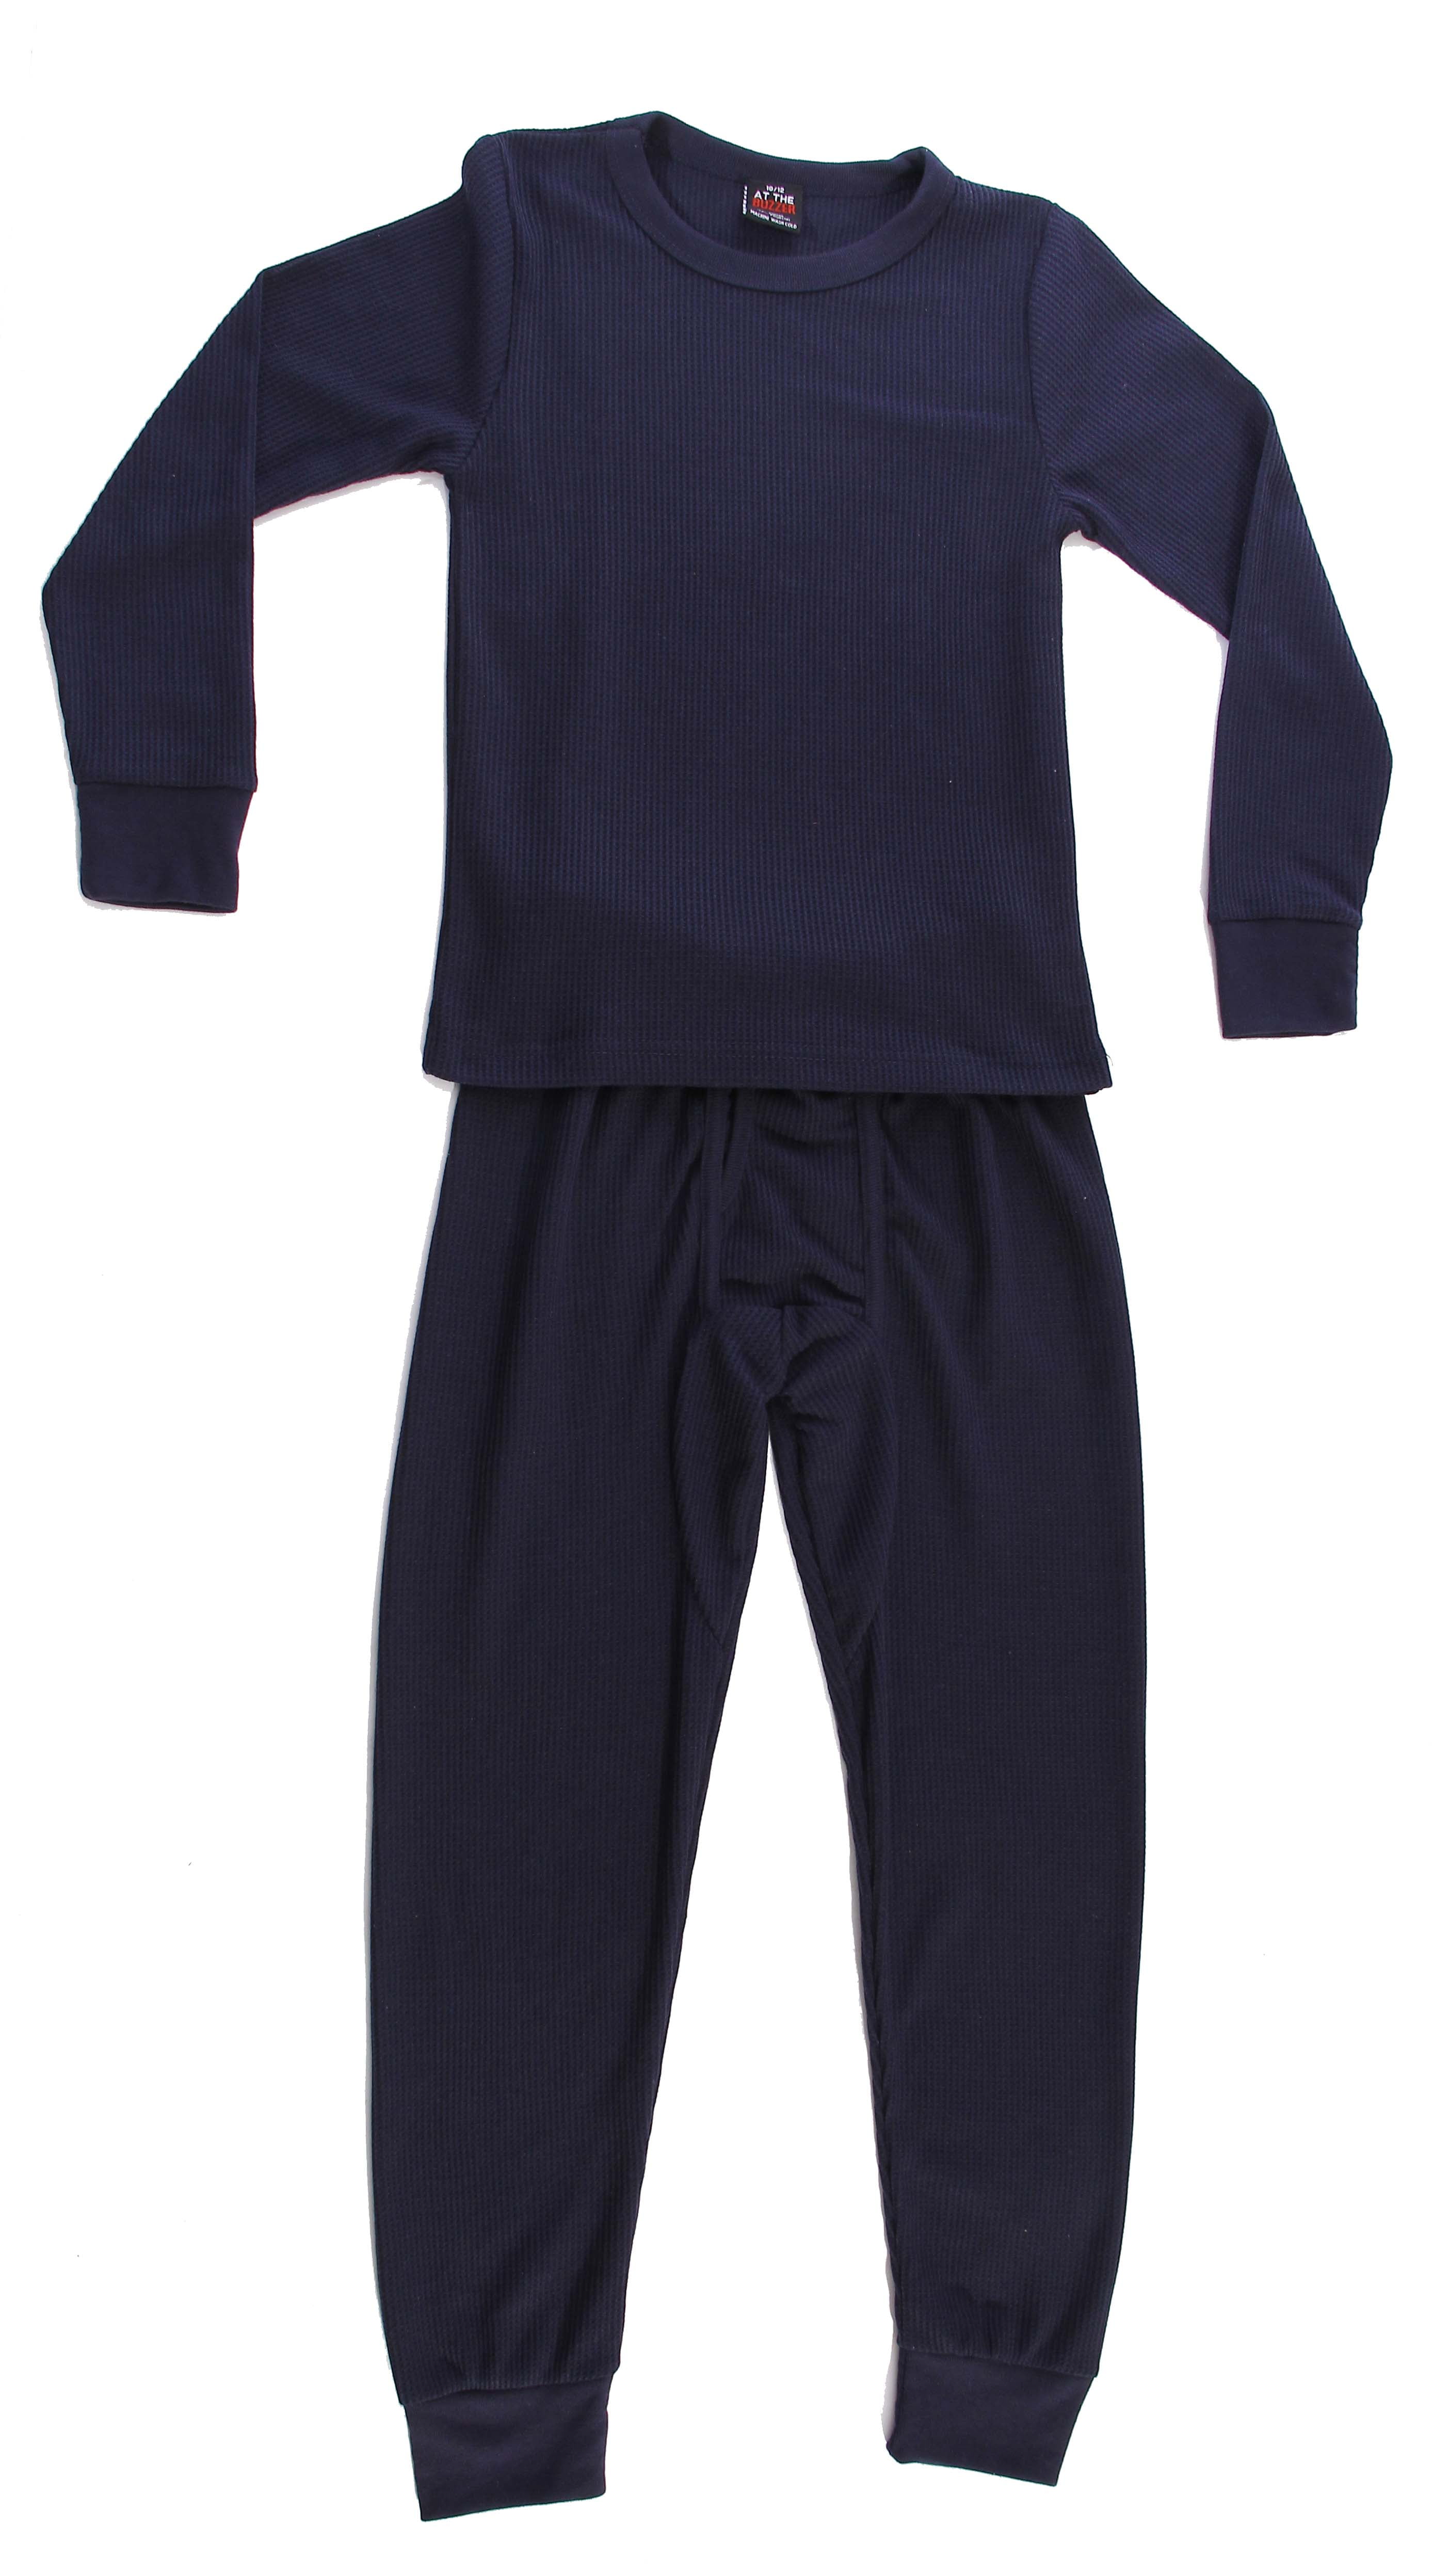 Thermal Underwear Set for Boys (5-6, Navy) - Walmart.com